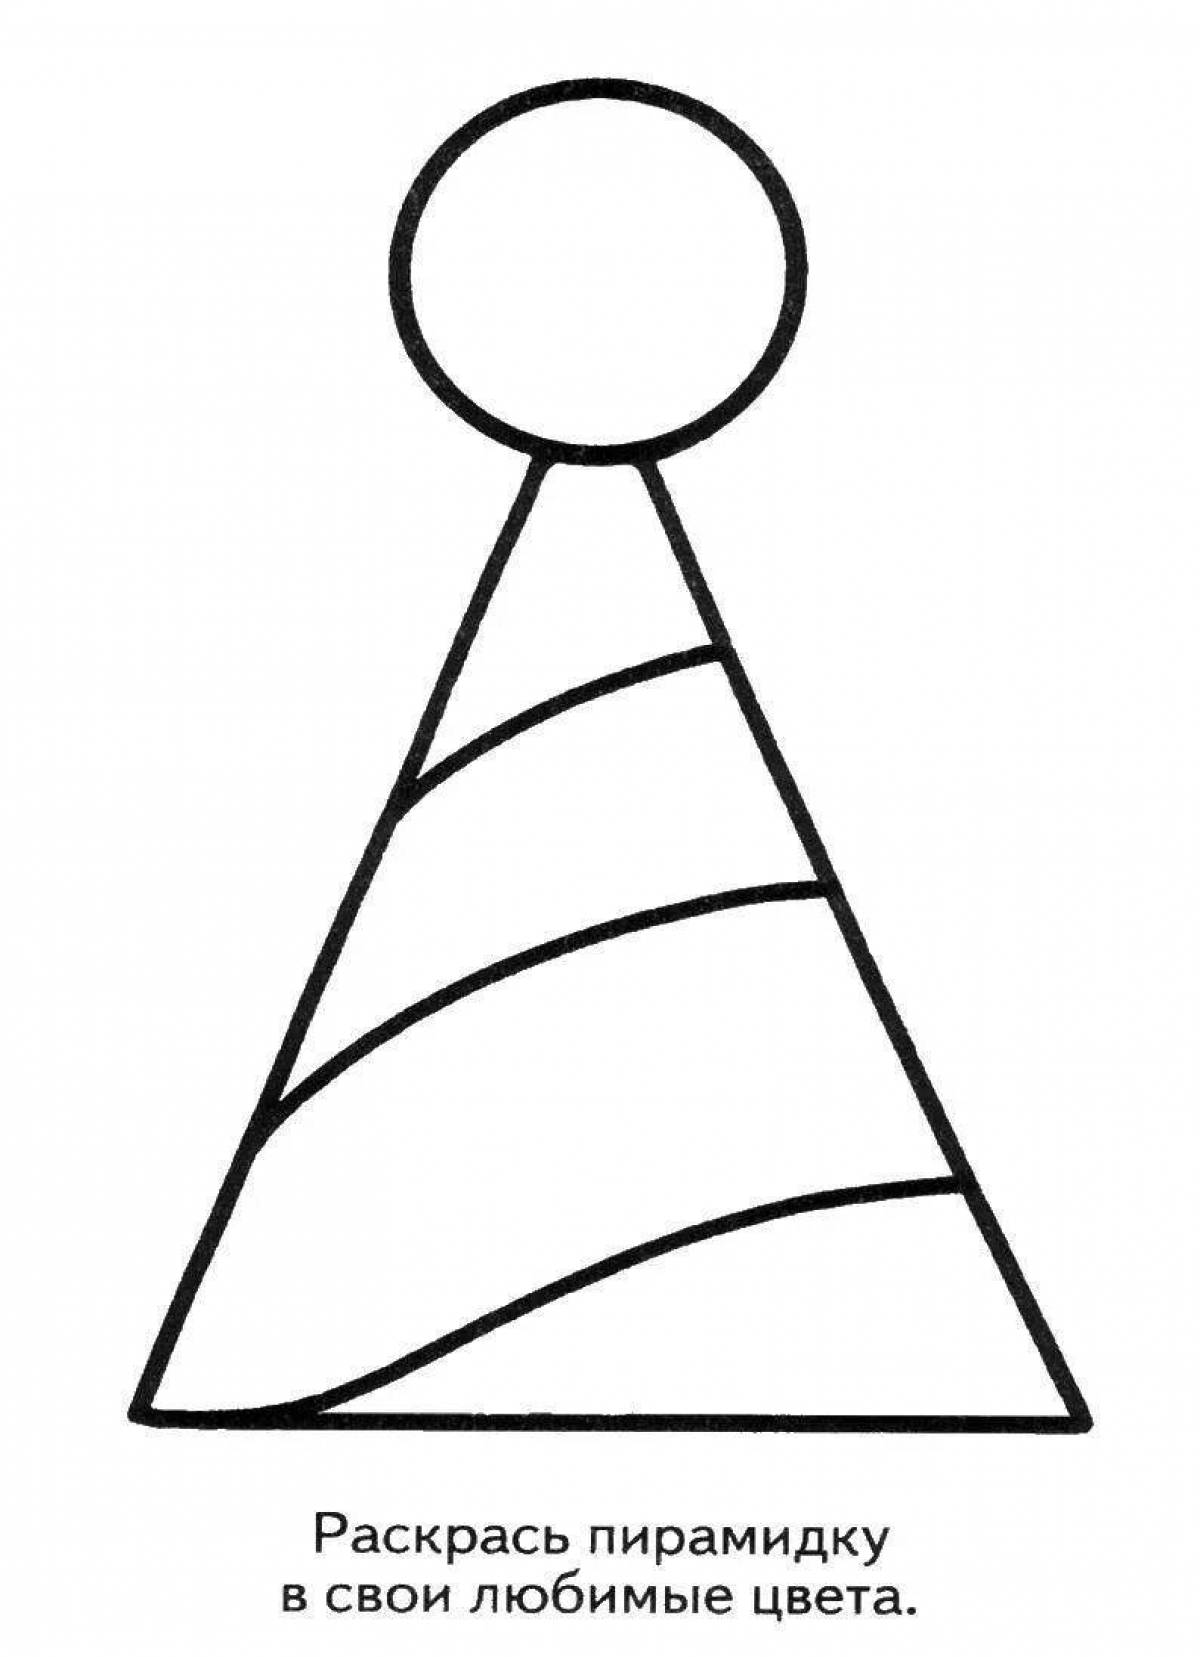 Pyramid for children #8